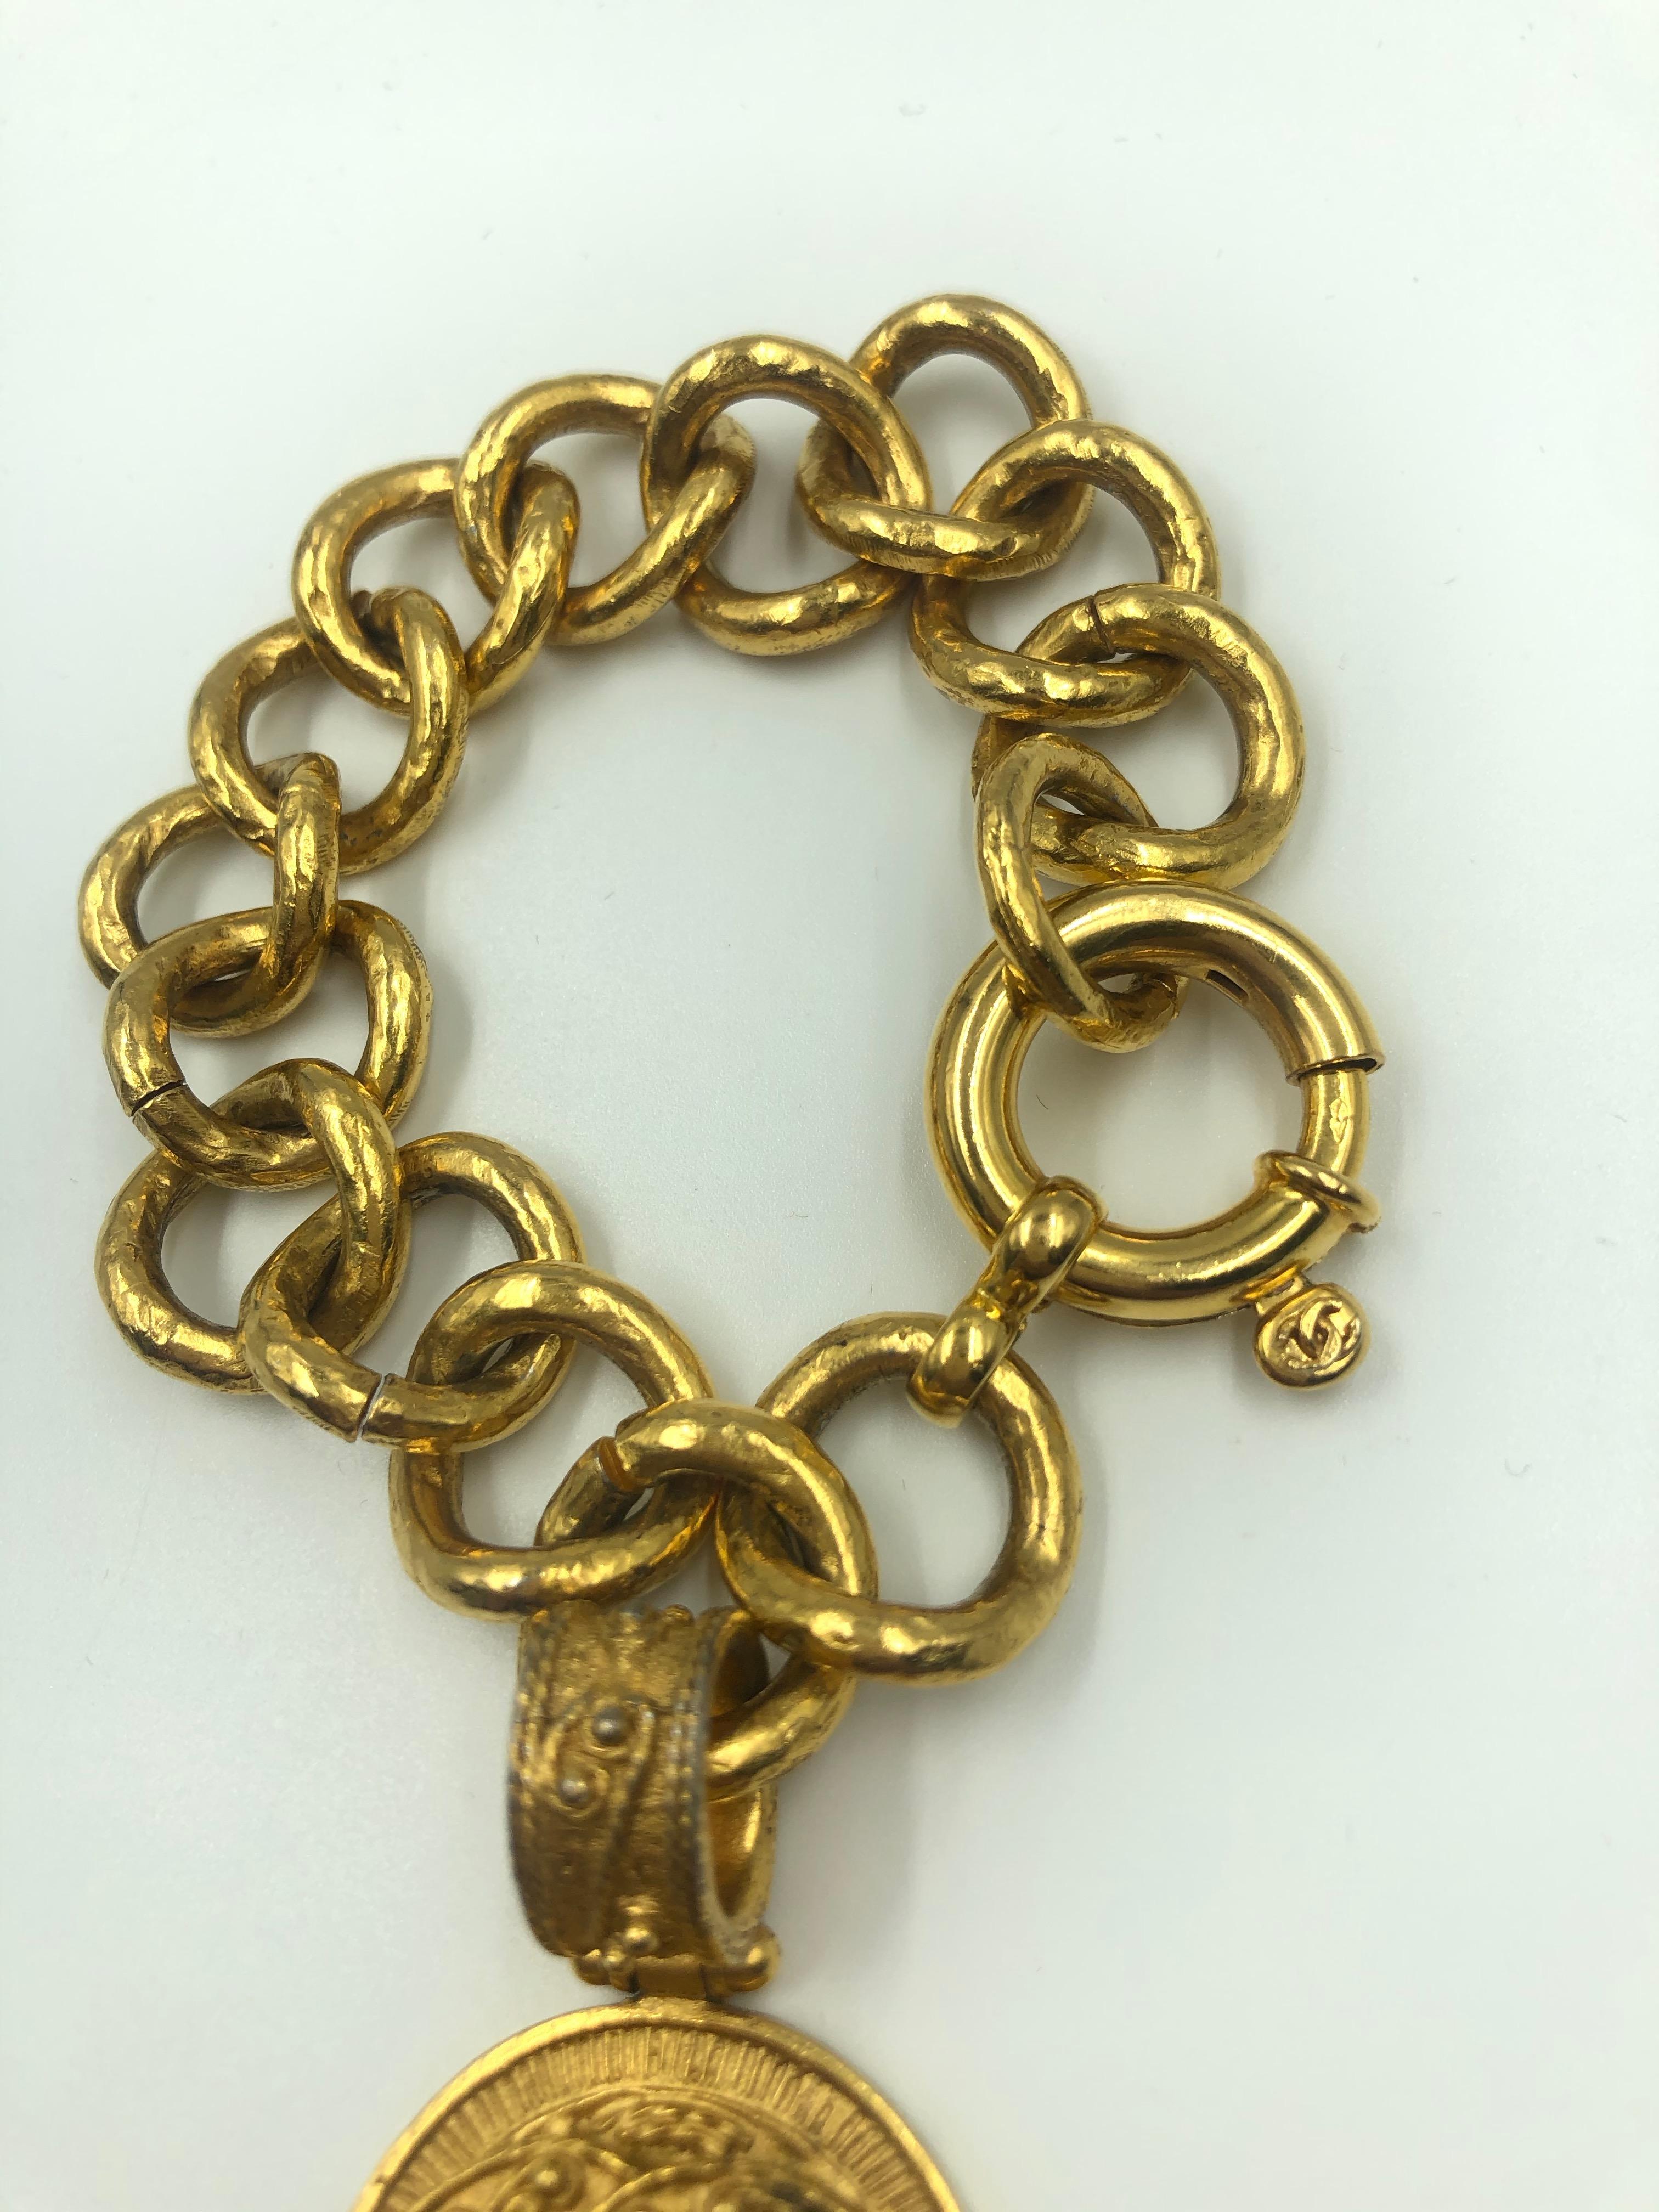 cc bracelet gold